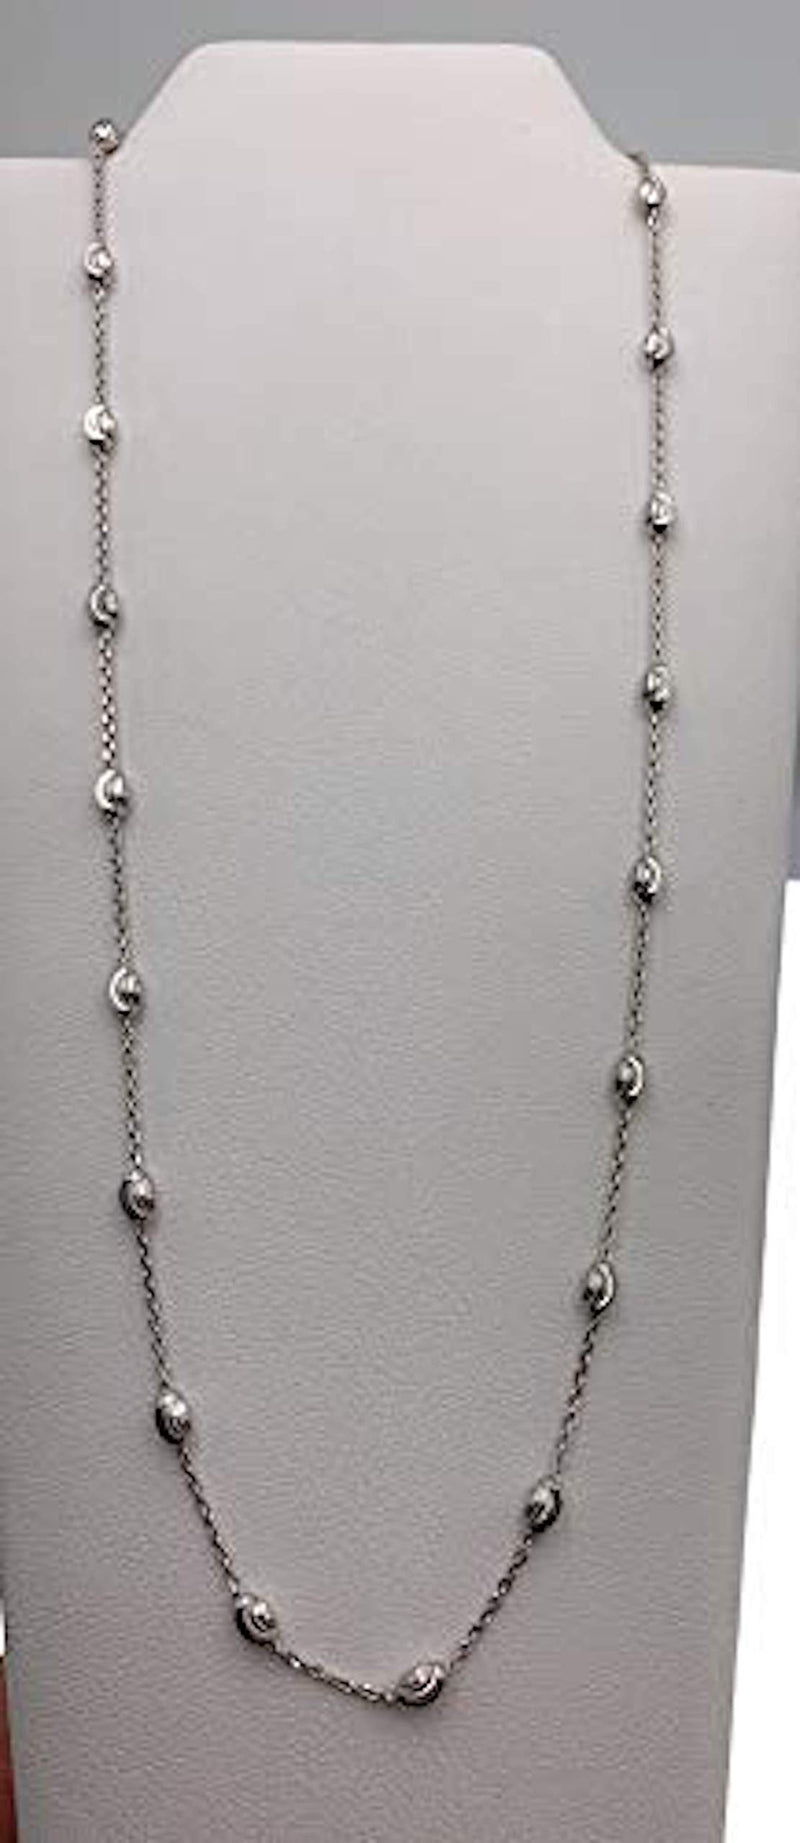 [Australia] - Silvadi Sterling Silver Italian Mooncut Bead Necklace 16.0 Inches 